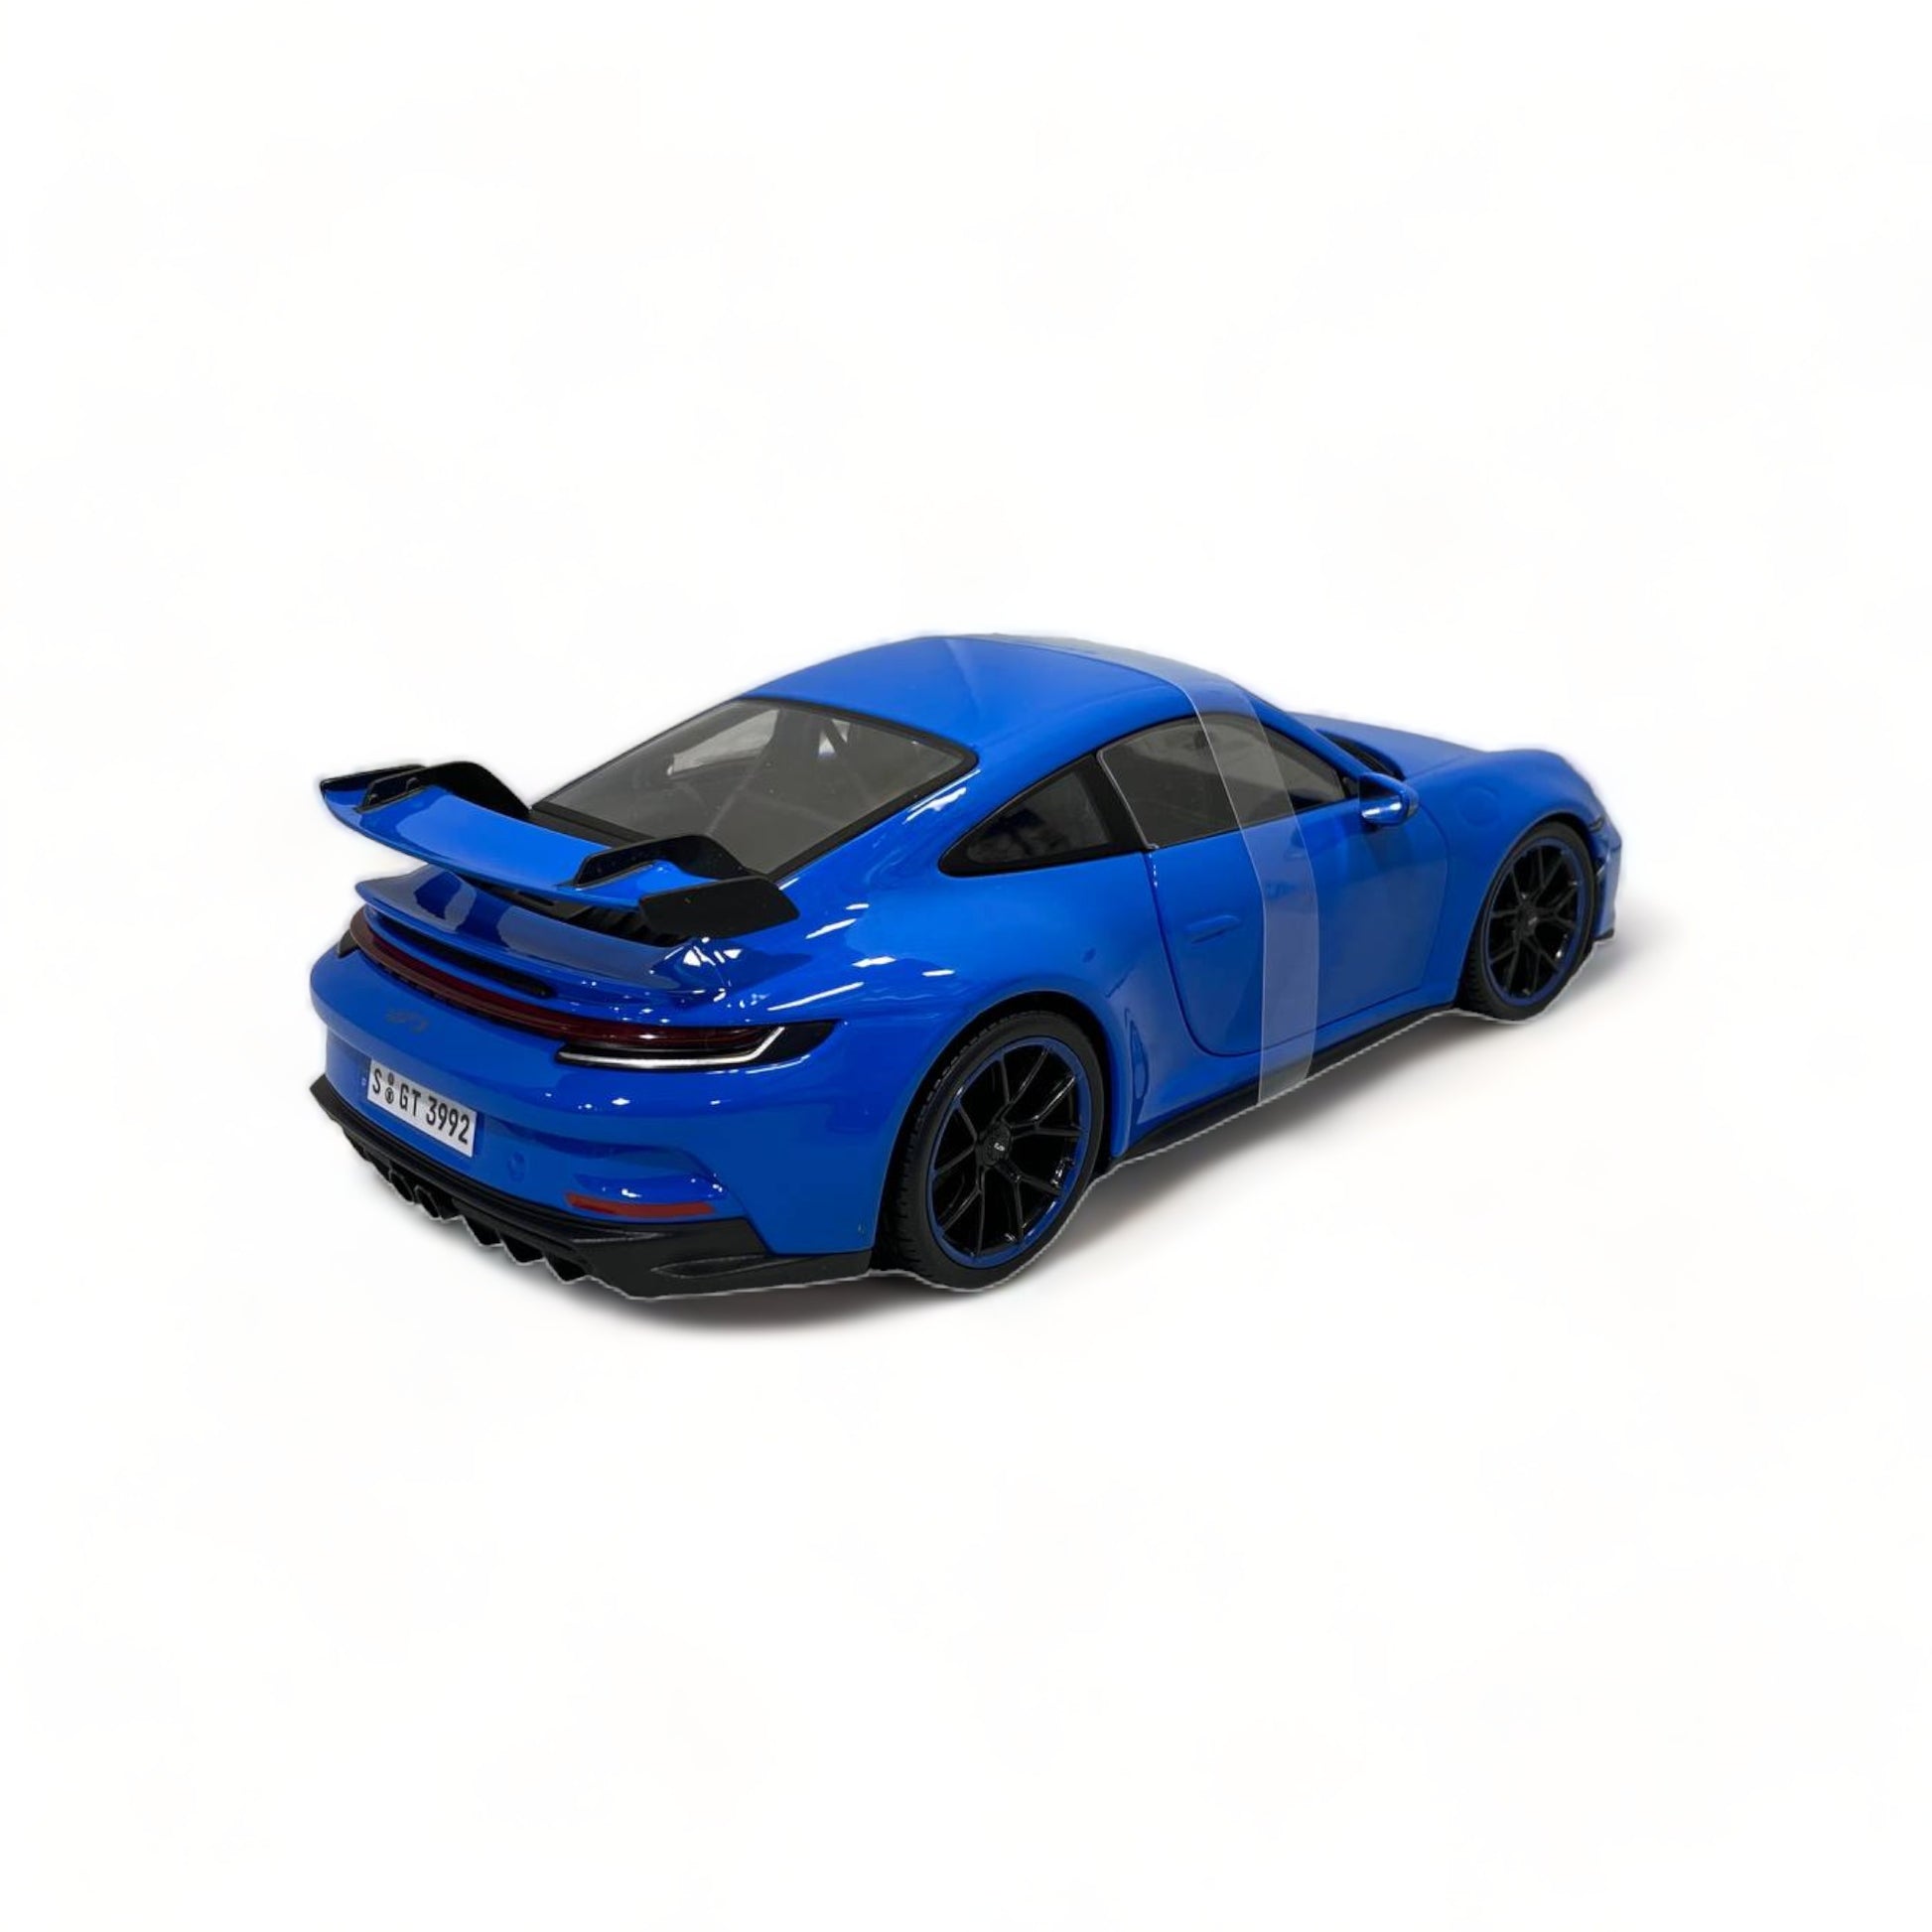 1/18 Diecast Porsche 911 GT3 Blue Scale Model car by Maisto